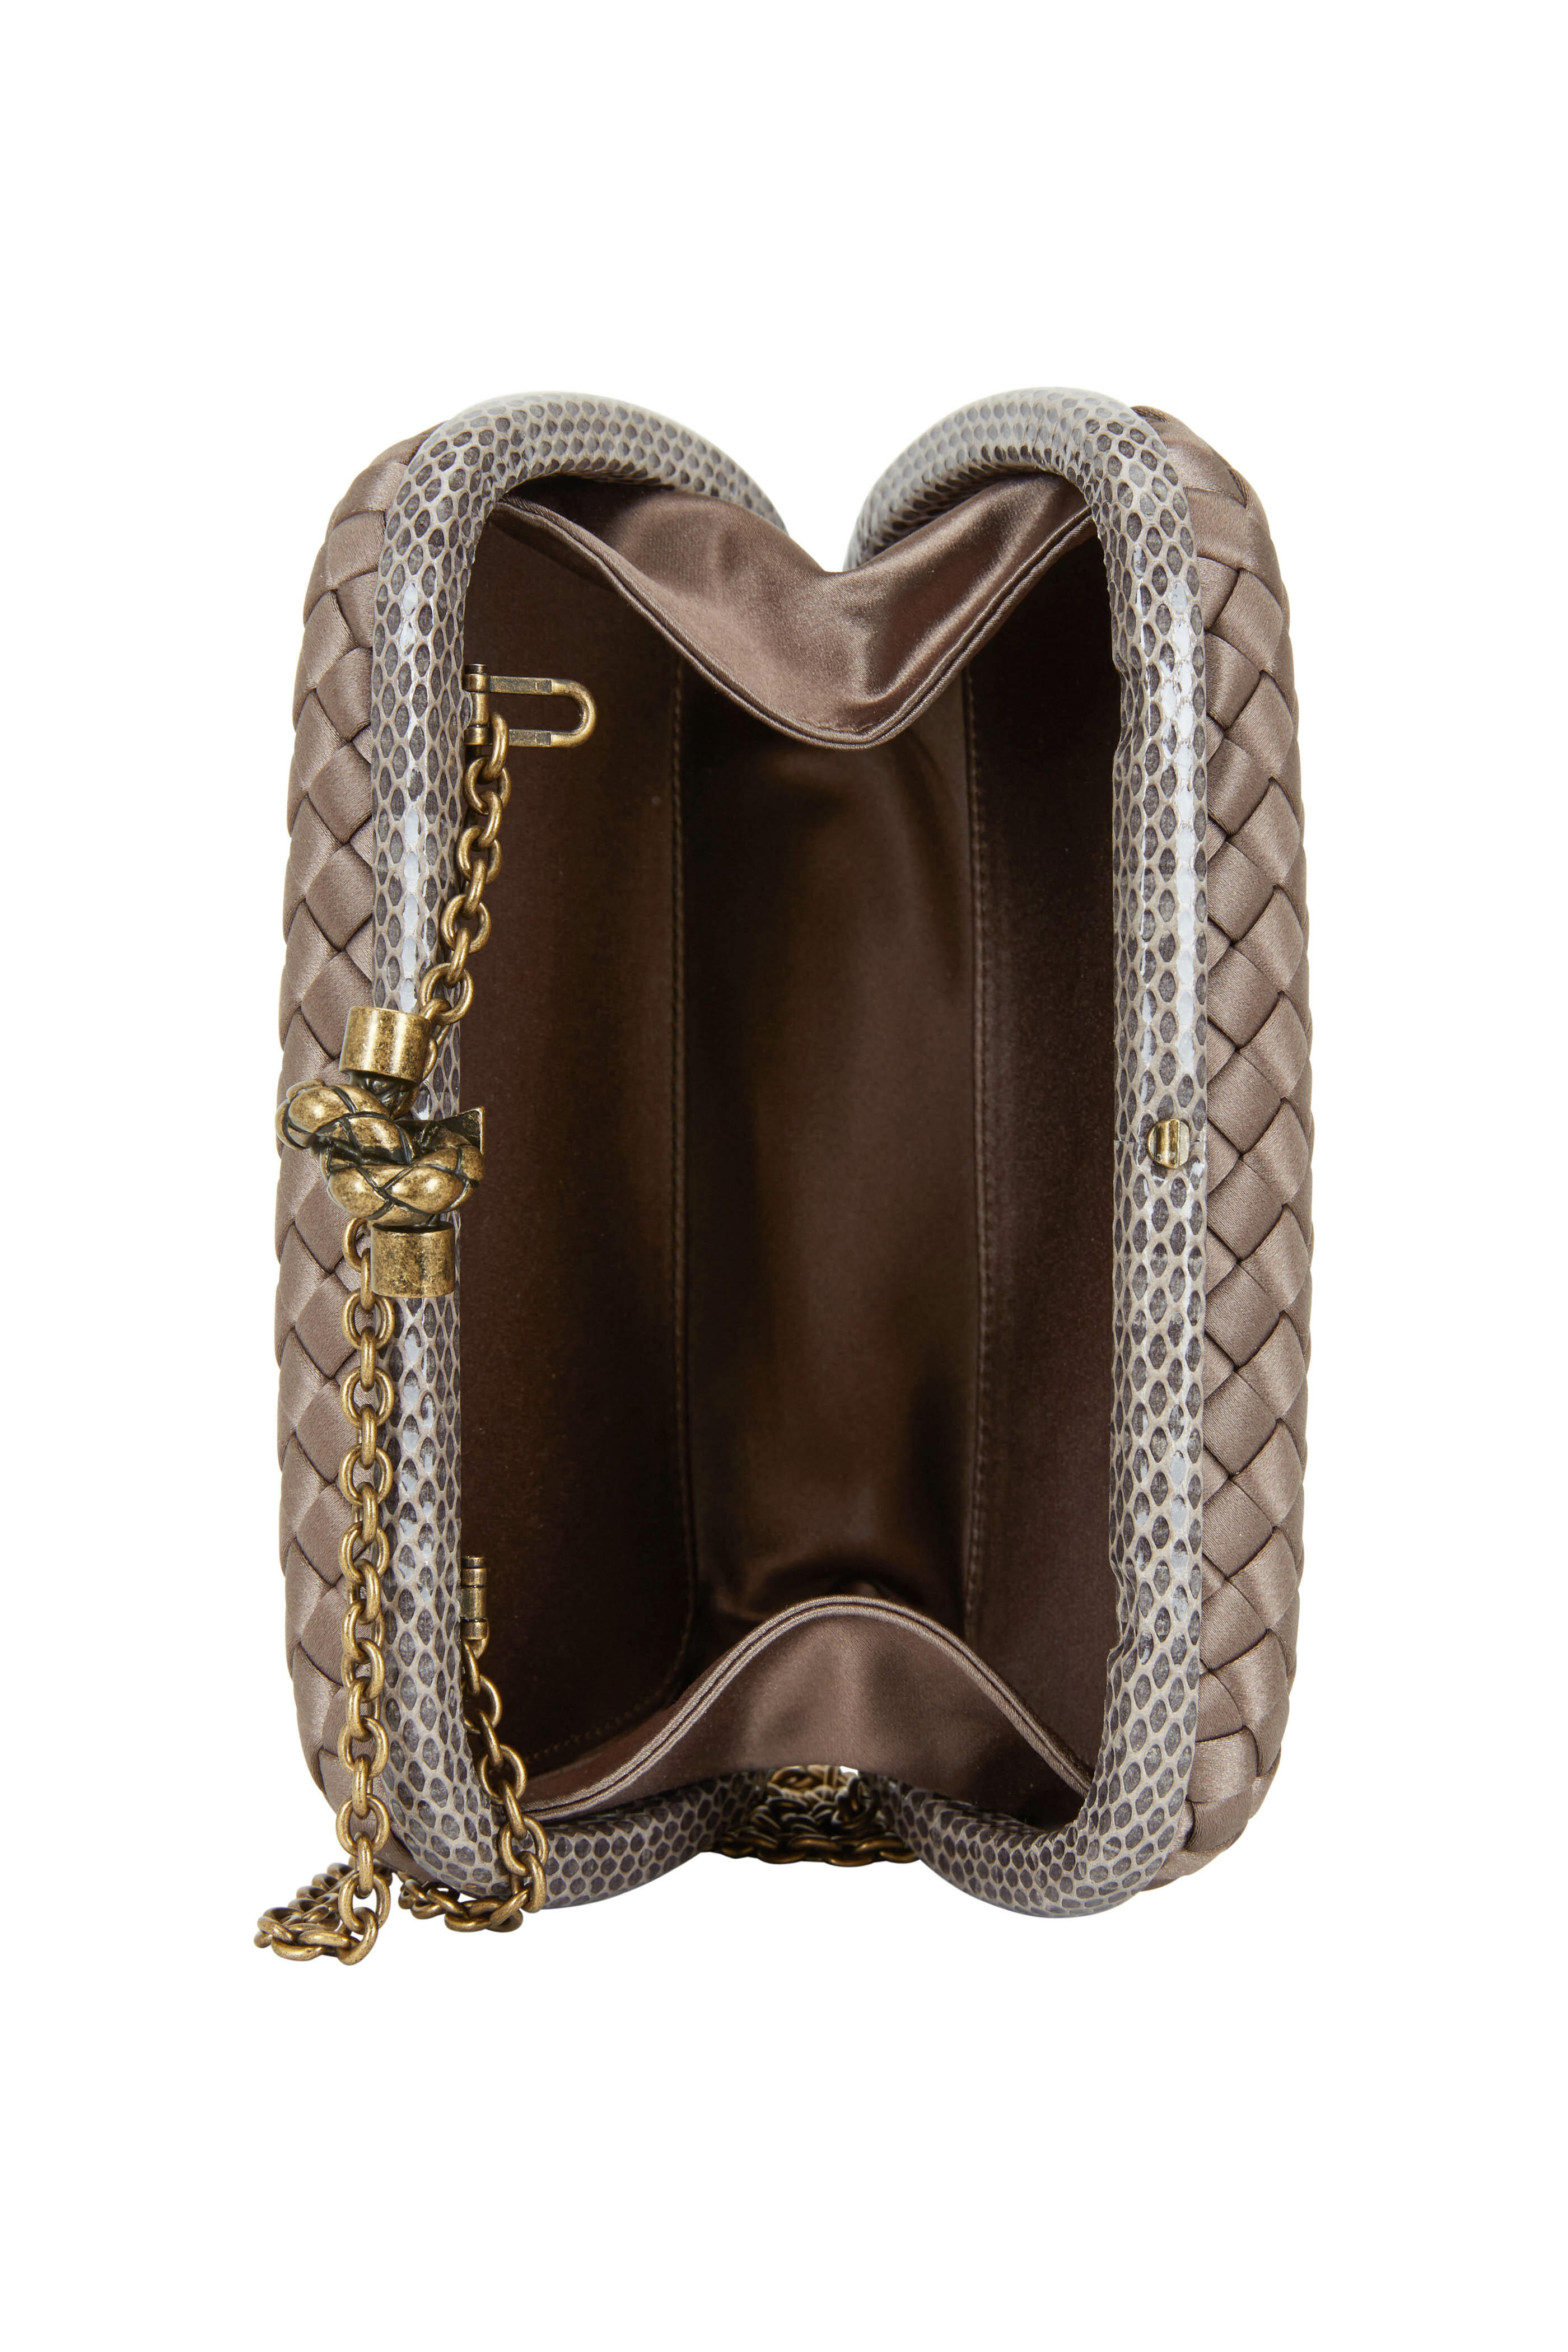 Bottega Veneta Knot Intrecciato Leather Shoulder Bag